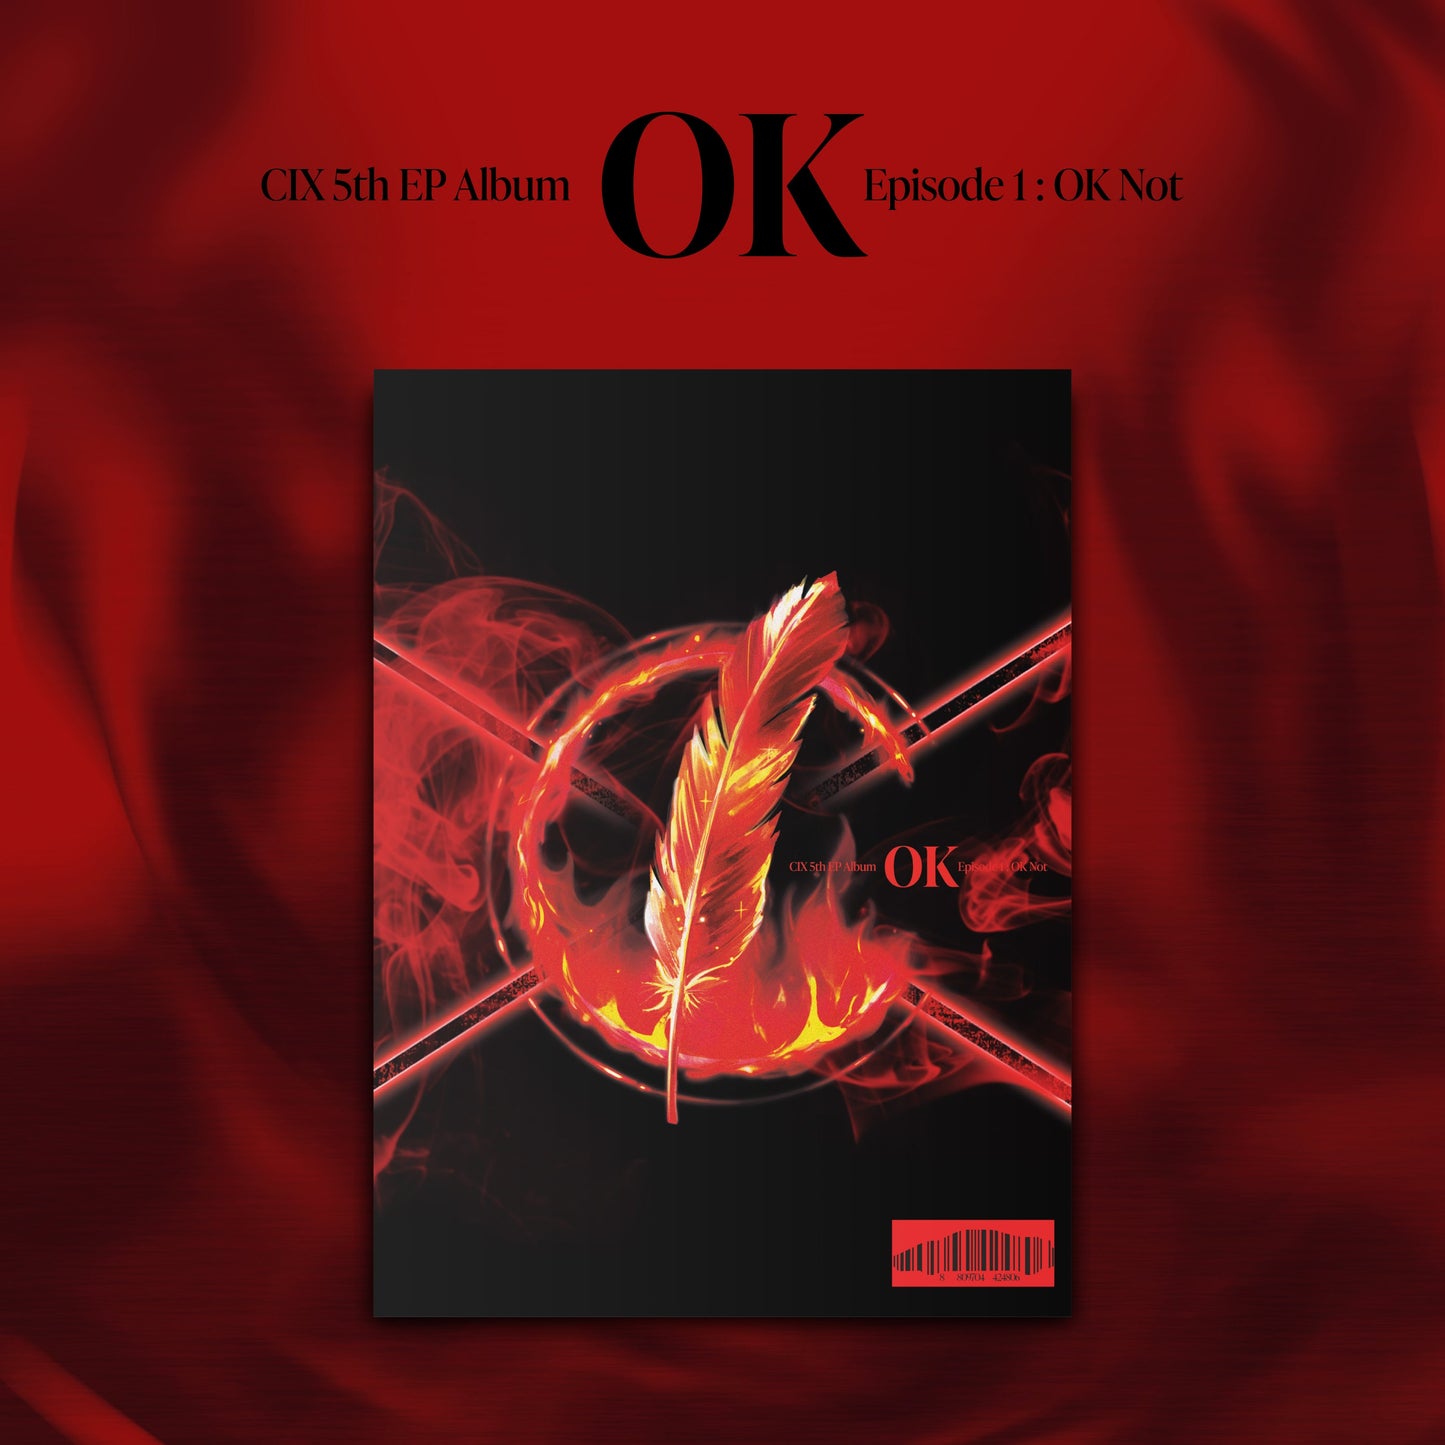 CIX 5TH EP ALBUM 'OK EPISODE 1 : OK NOT' 염 COVER